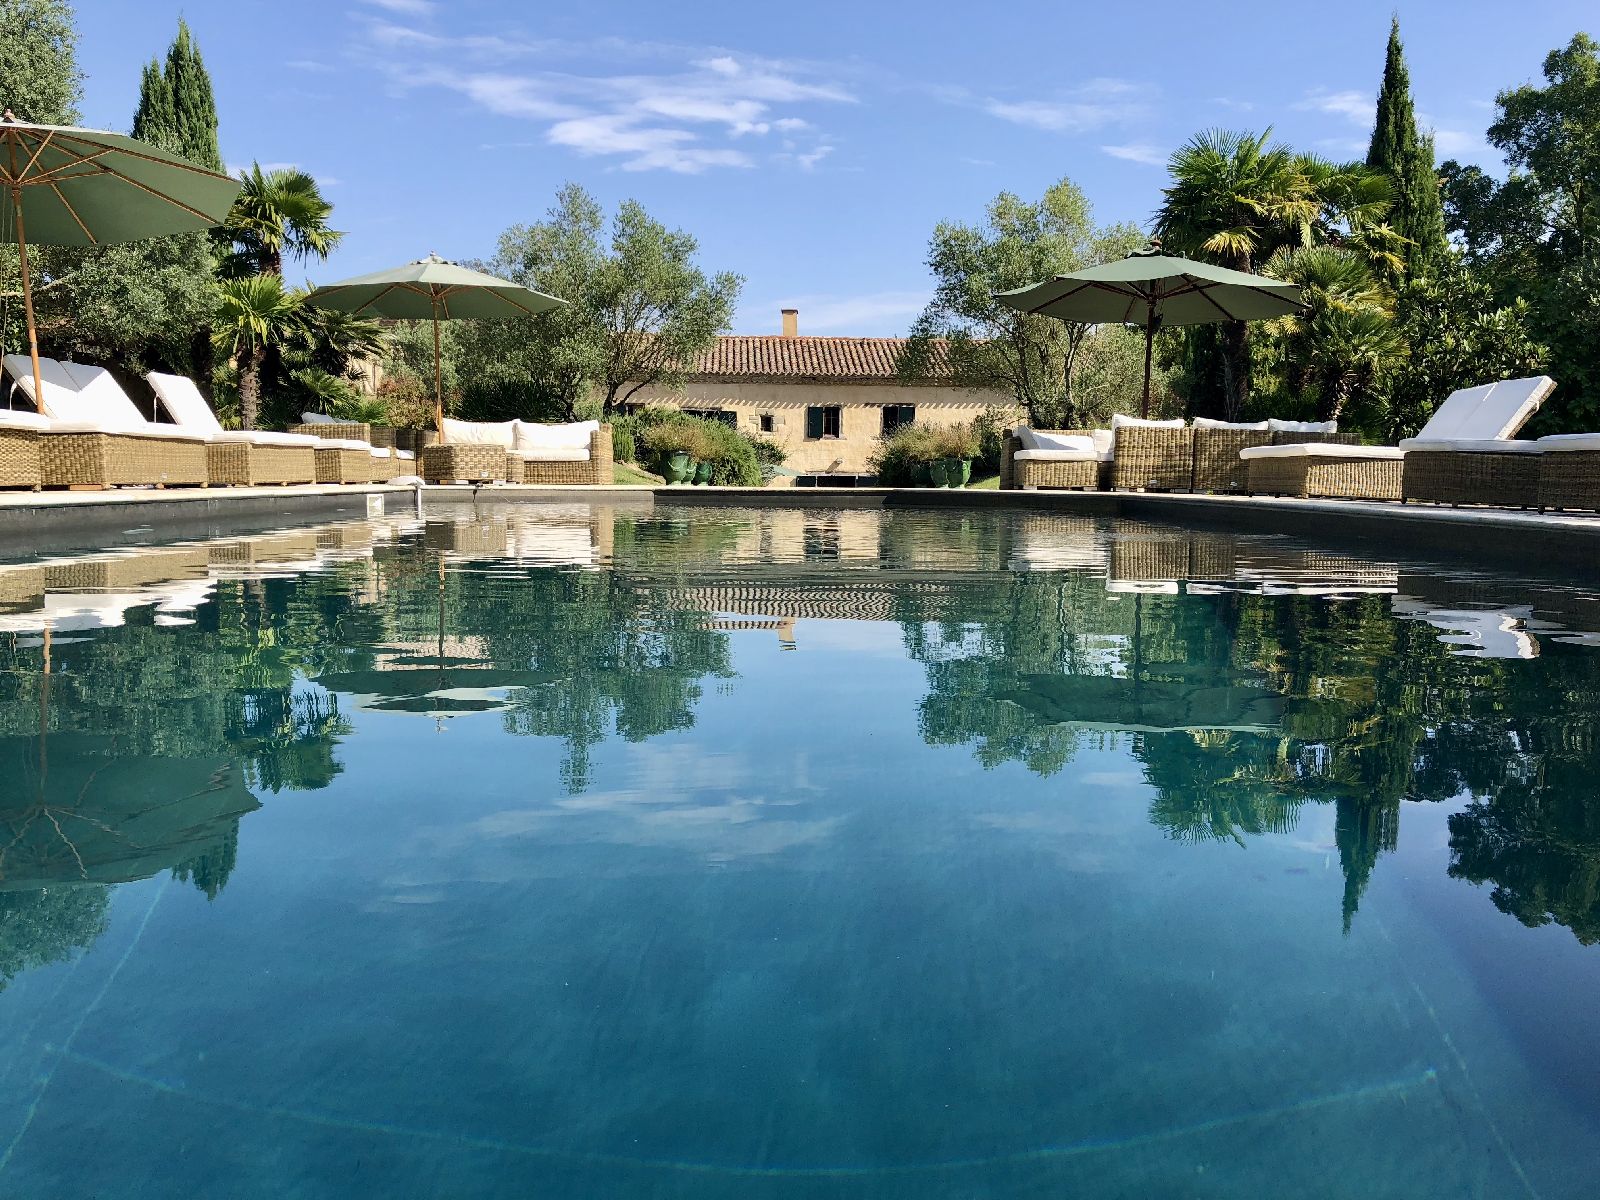 Pool and villa at Domaine de la Hille in France